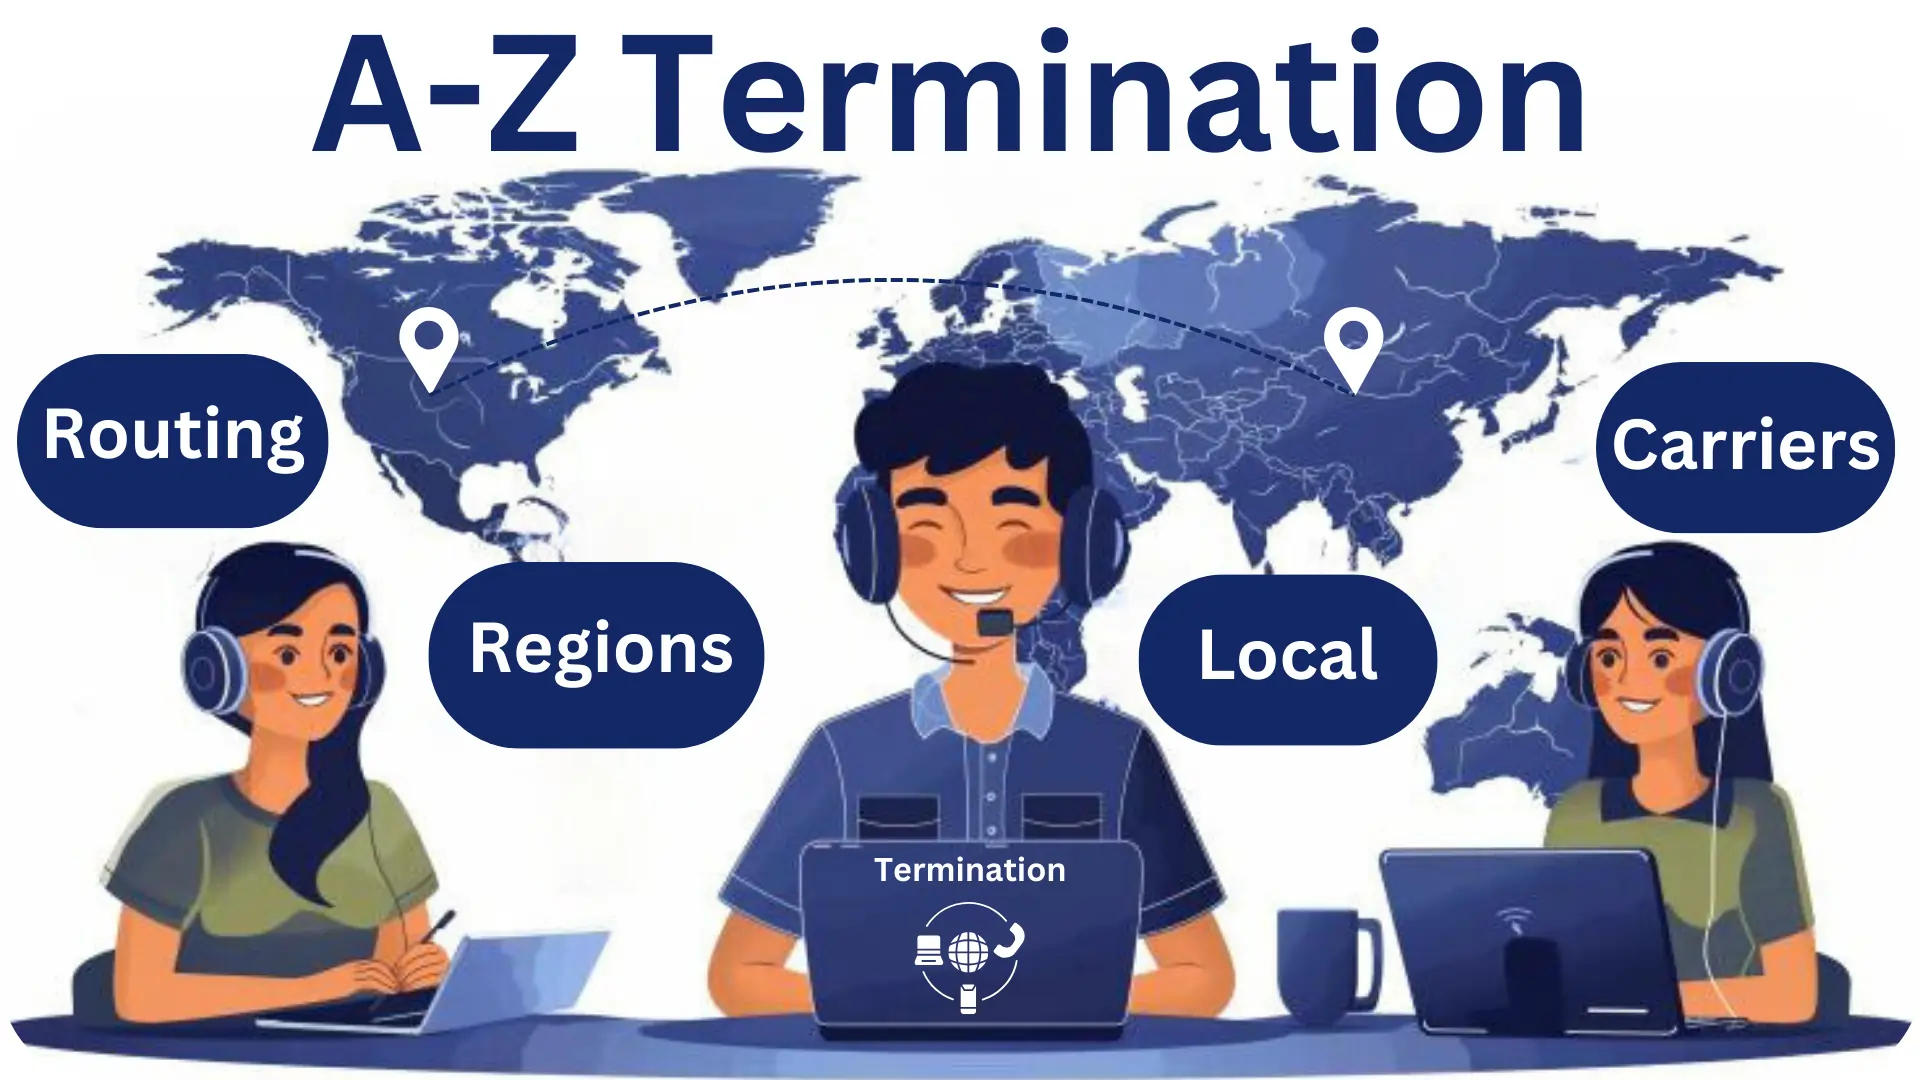 A-Z Termination